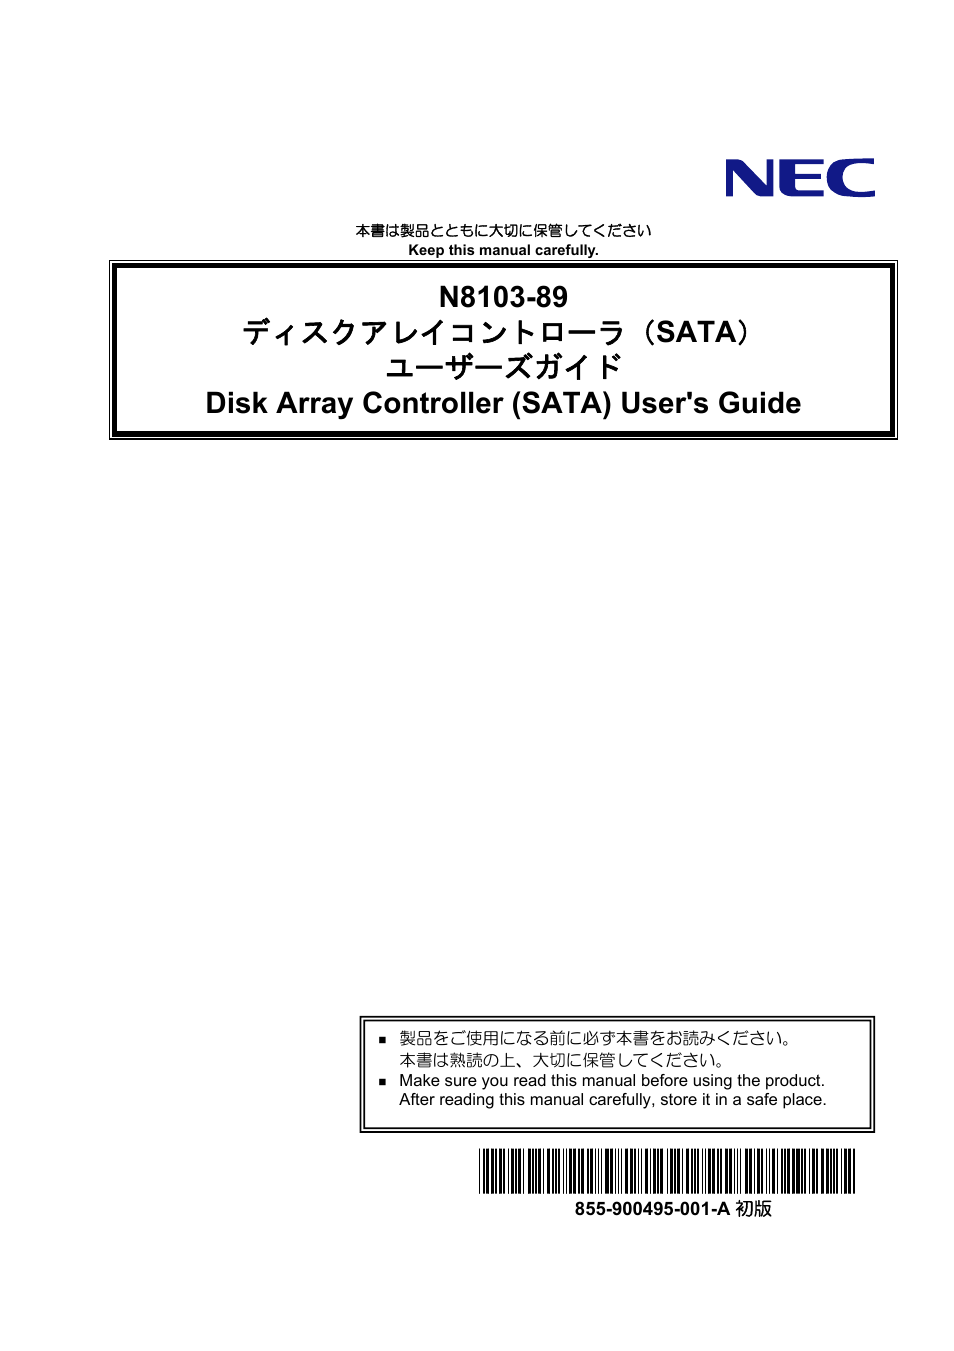 Disk Array Controller N8103-89